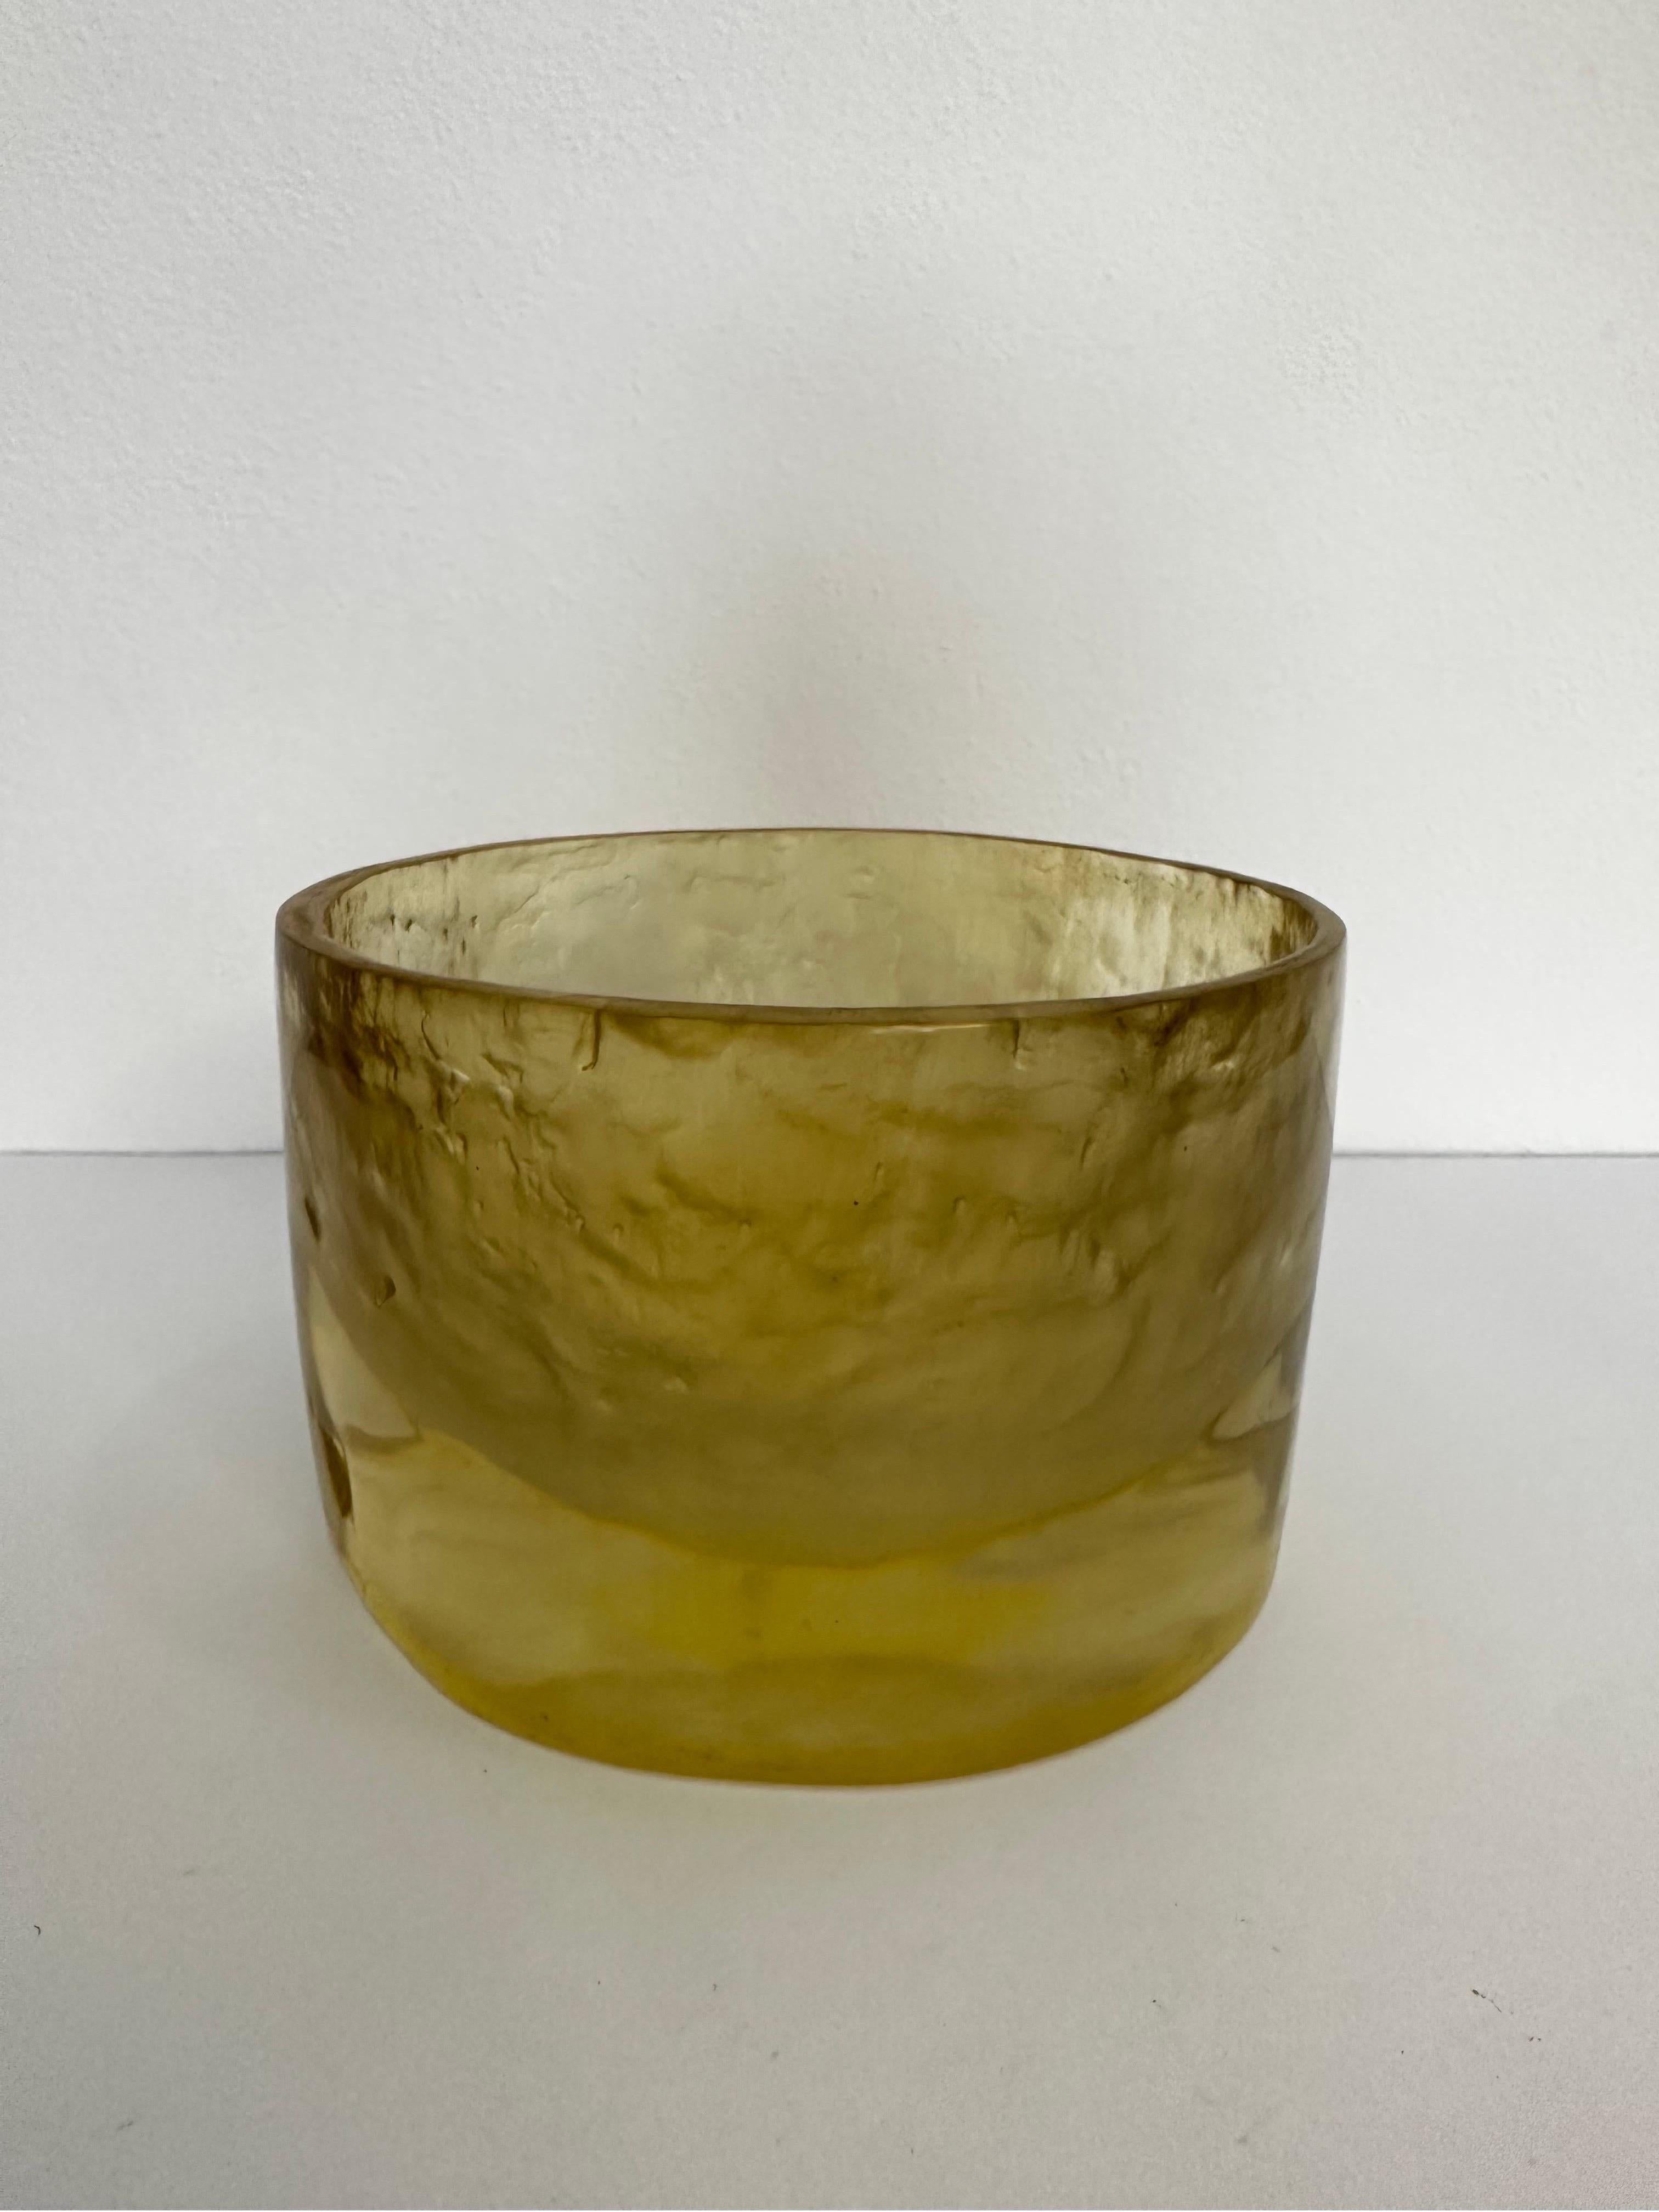 Brazilian Modern Sculptural Resin Bowl. 1980s For Sale 1